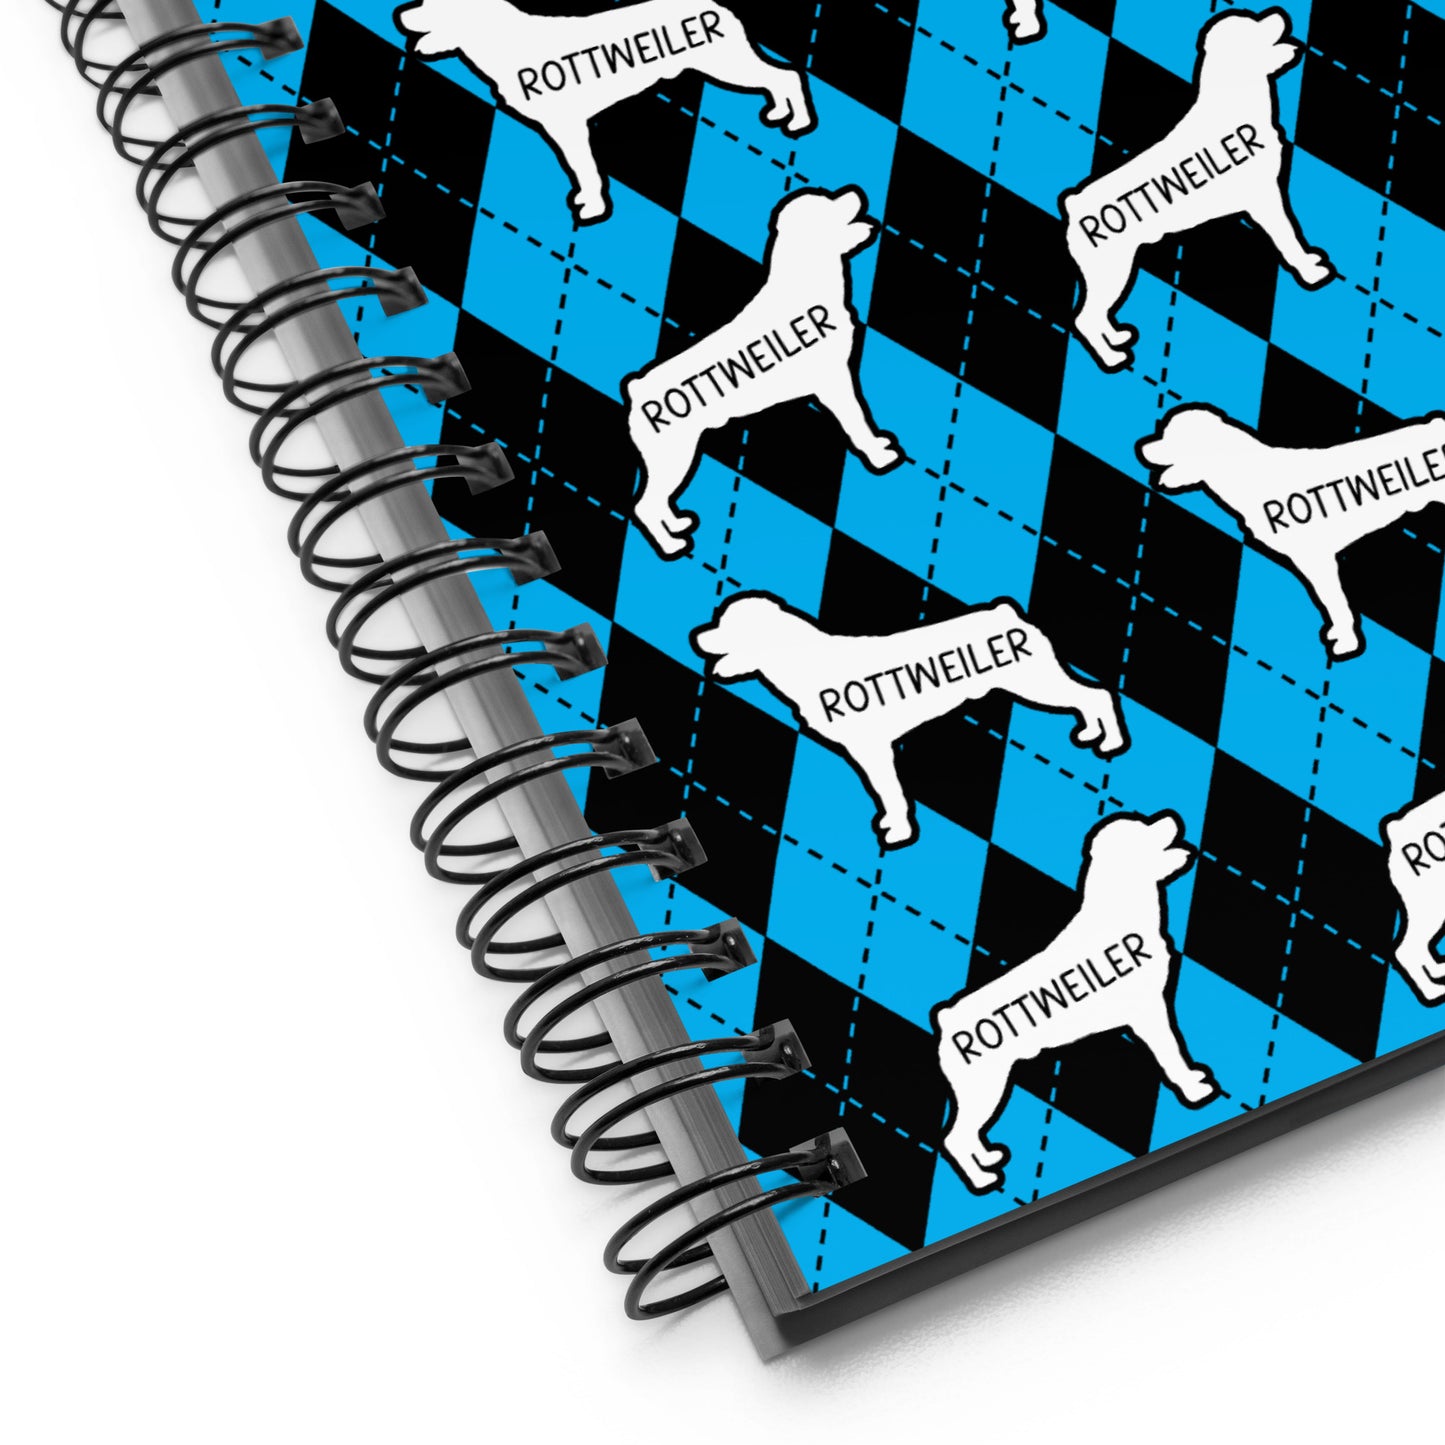 Rottweiler Argyle Blue and Black Spiral Notebooks